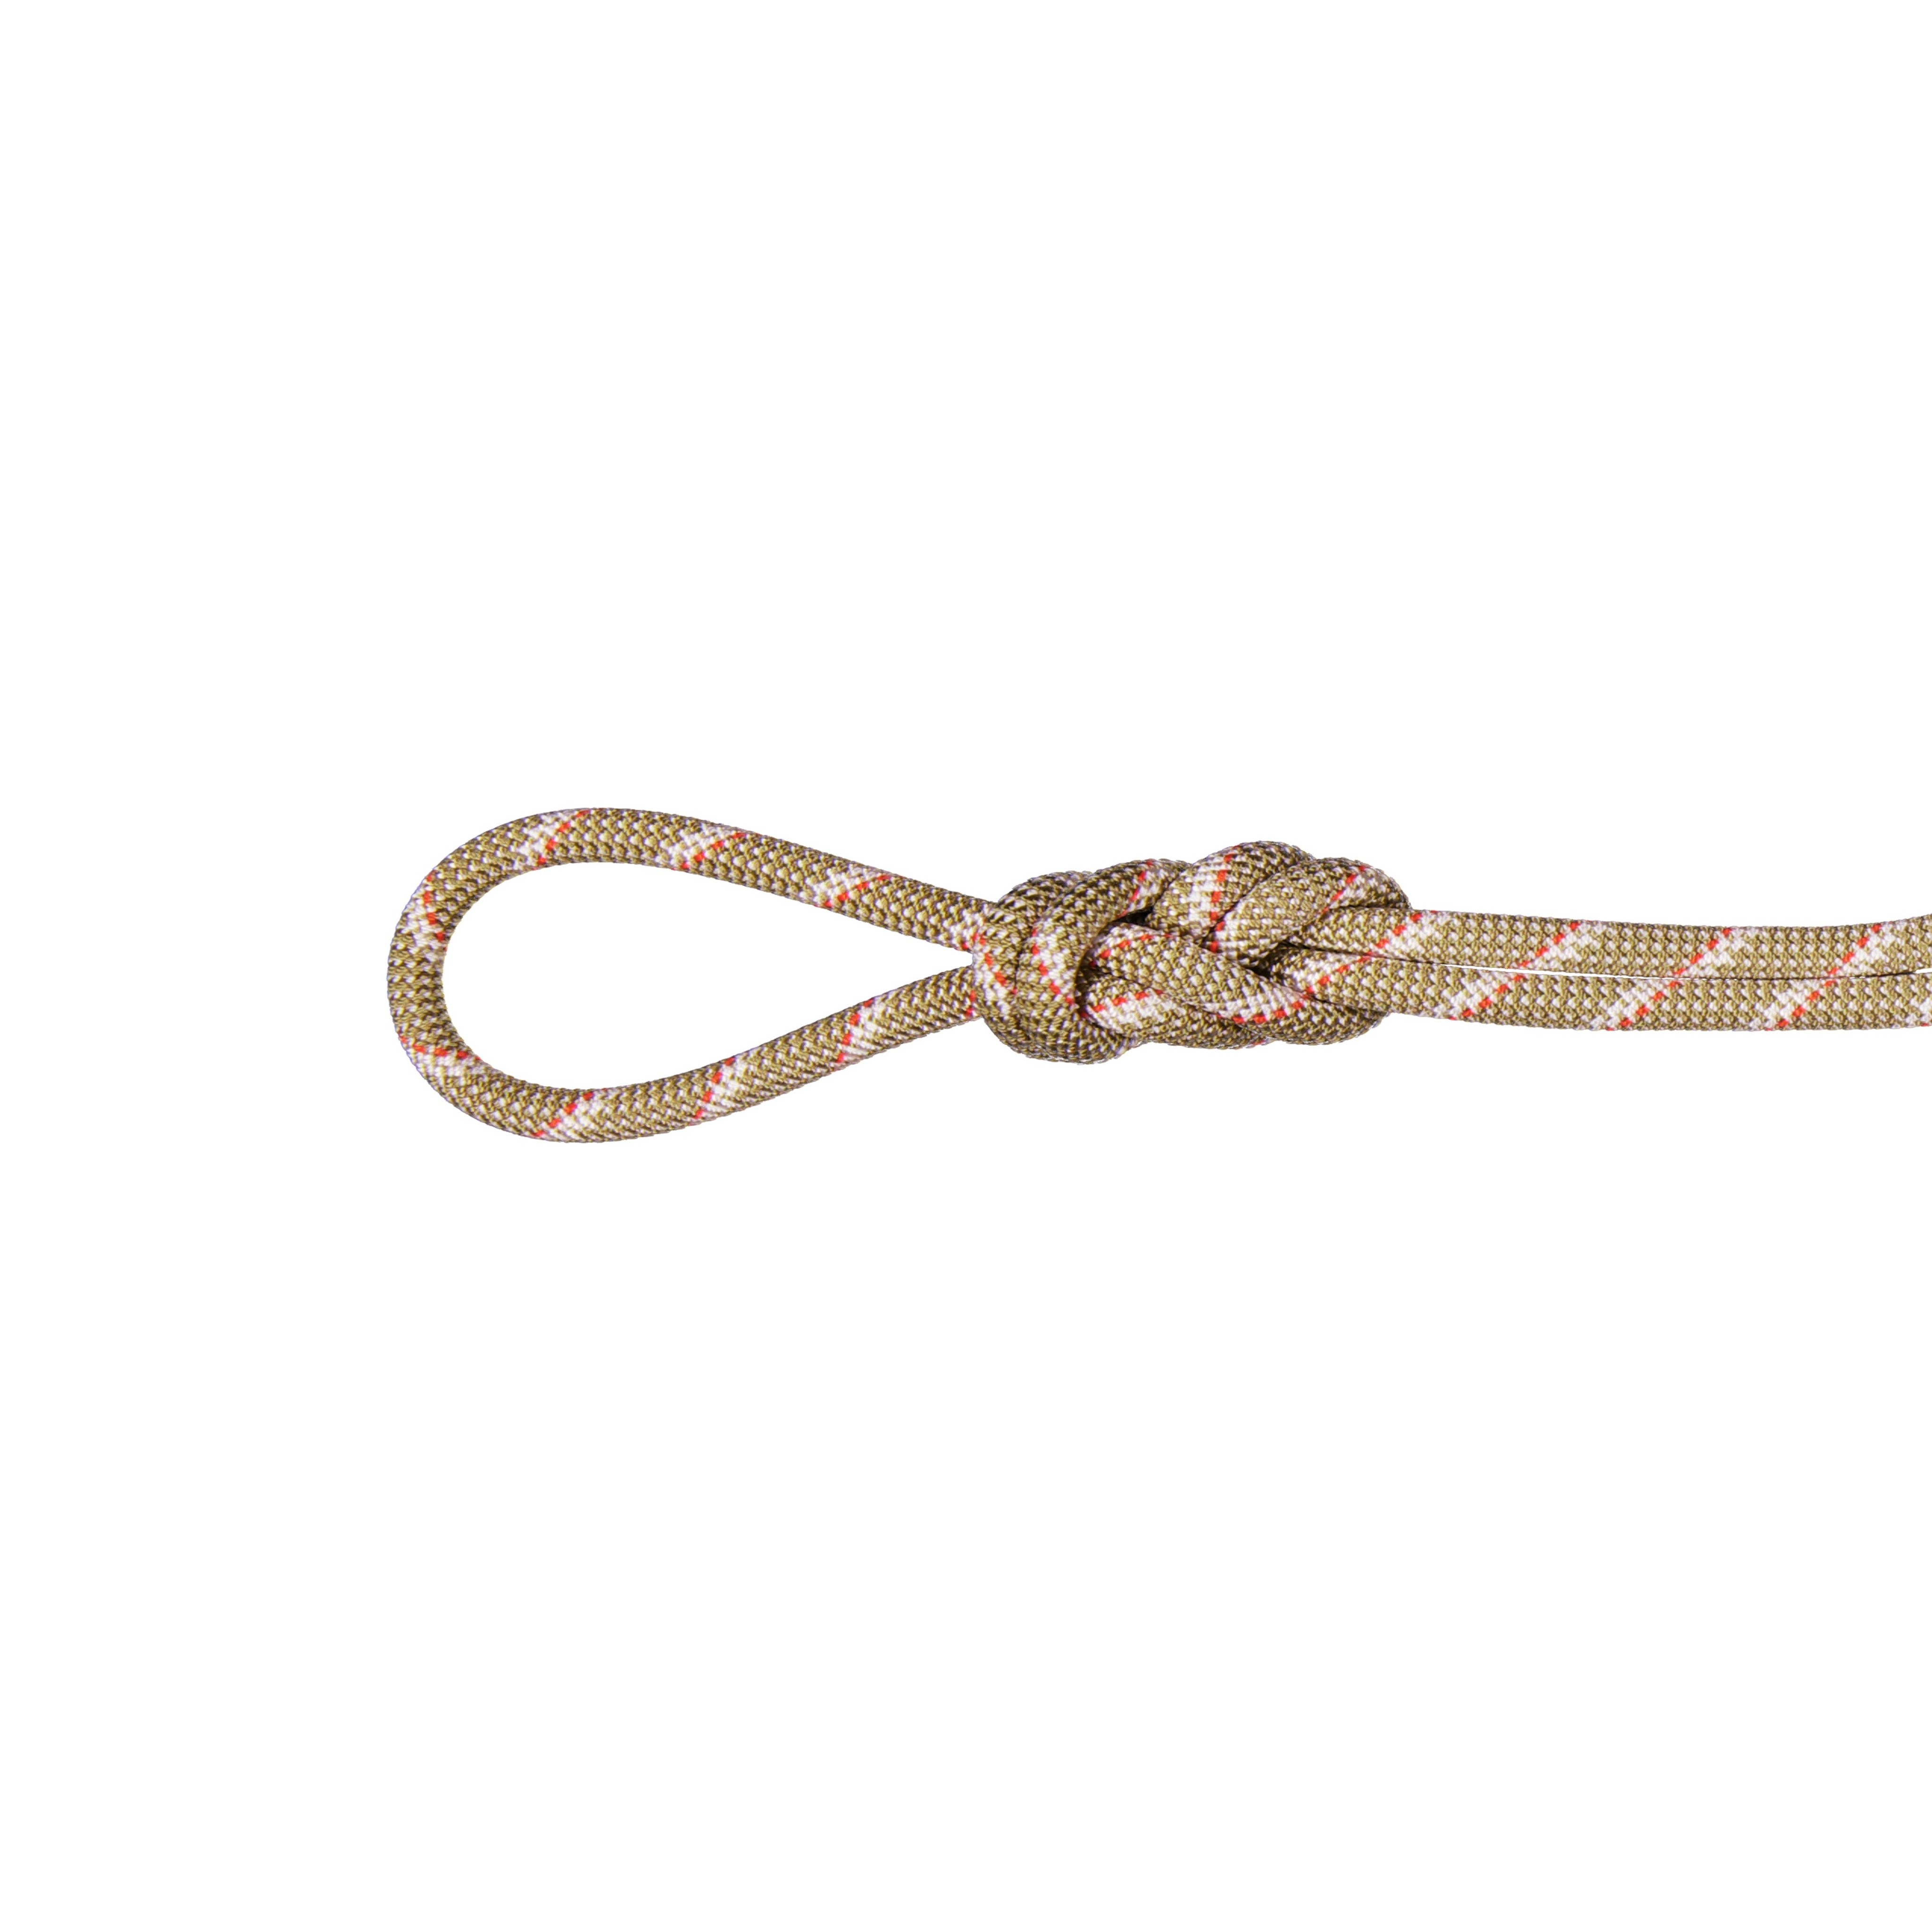 8.0 Alpine Classic Rope - Classic Standard, boa-white, 50 m thumbnail